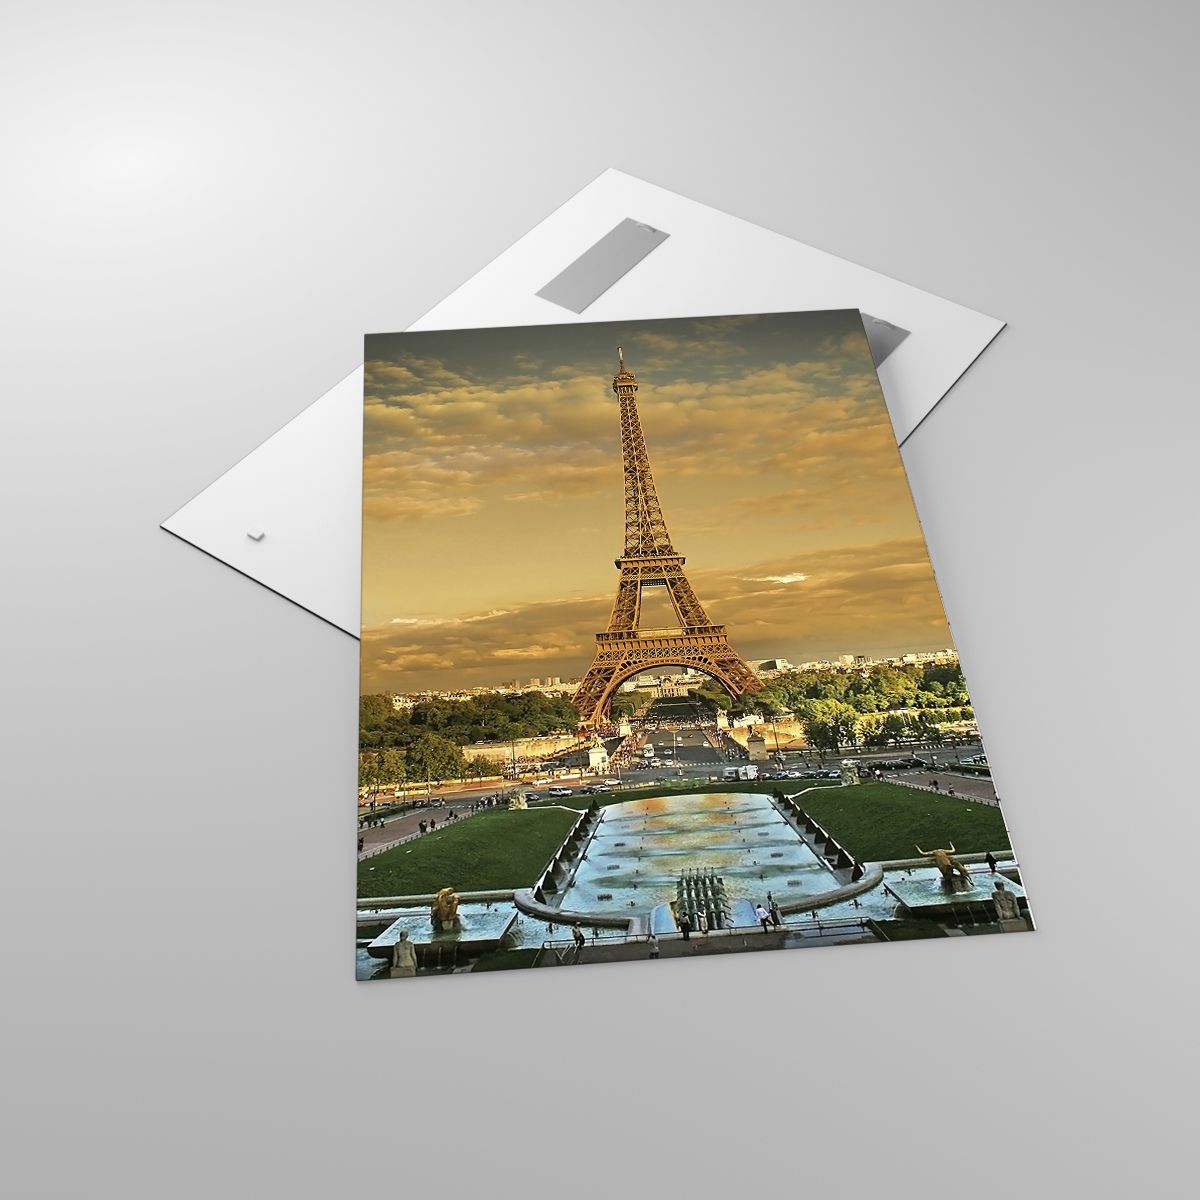 Impression Villes, Impression Paris, Impression Tour Eiffel, Impression Architecture, Impression France